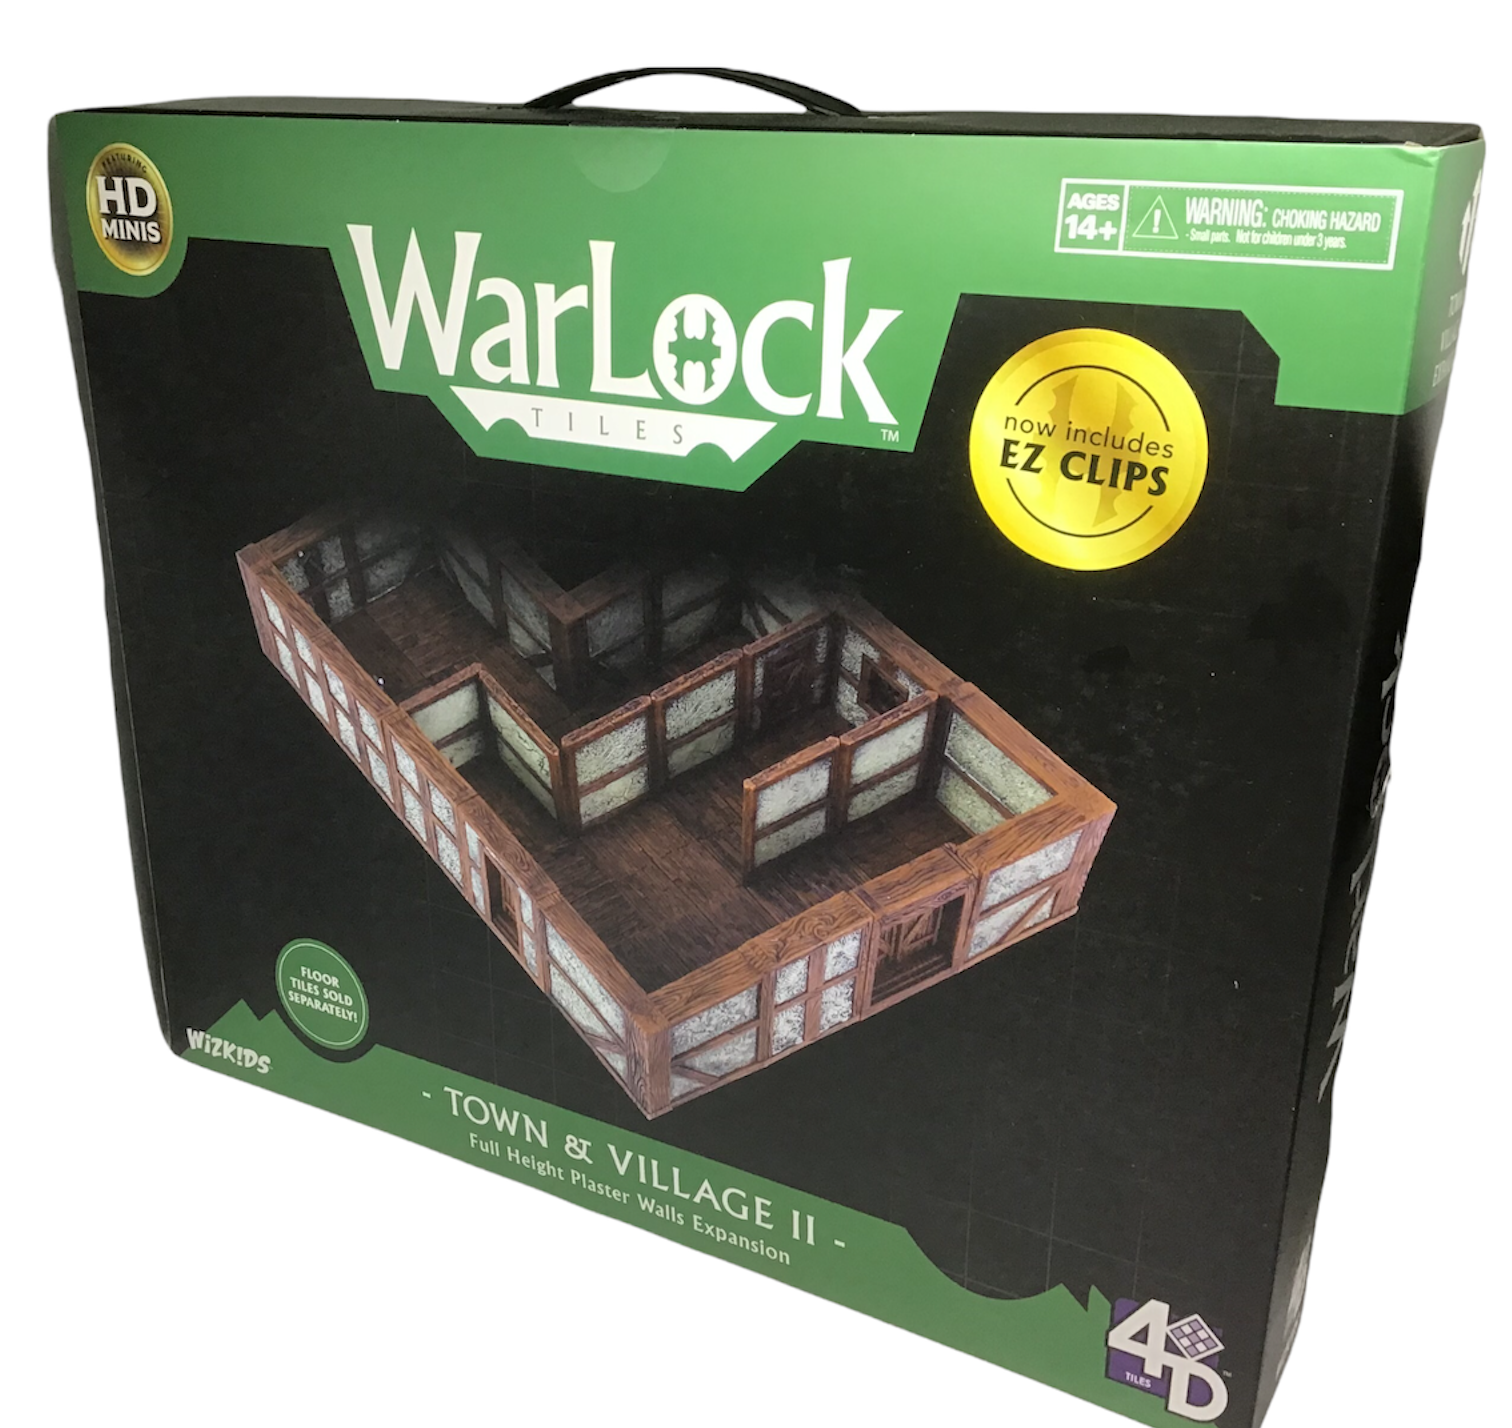 Warlock Tiles Town Village II Full Height Plaster Walls Expansion Clip HD Minis  - $89.05